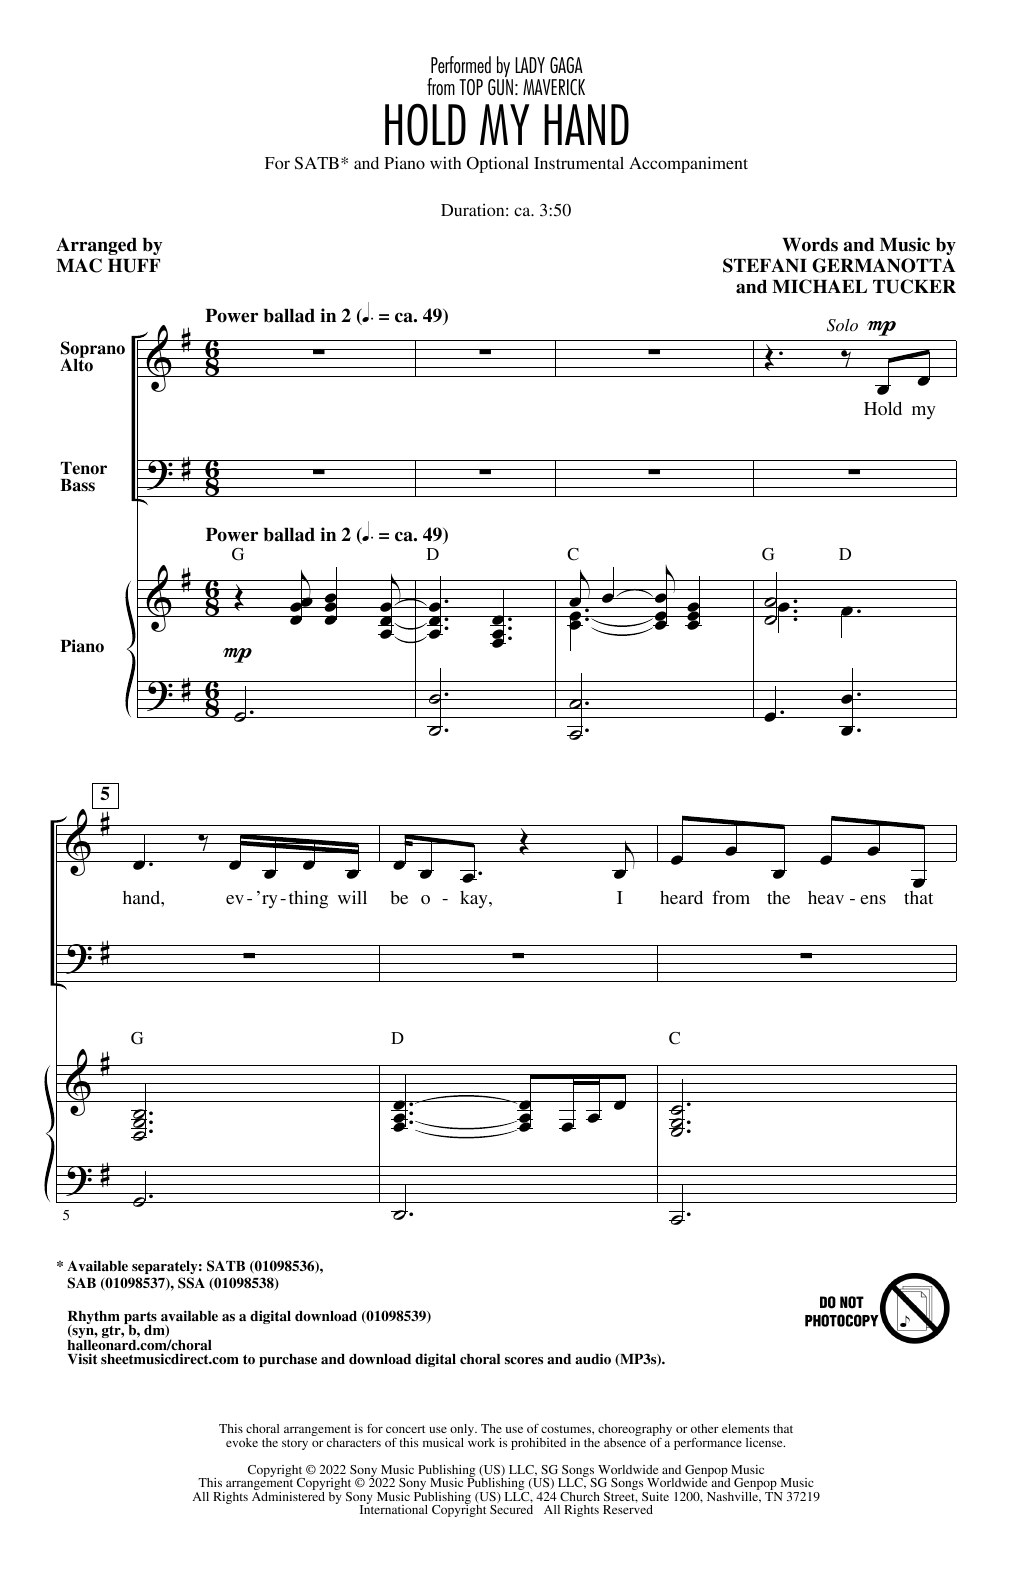 Lady Gaga Hold My Hand (from Top Gun: Maverick) (arr. Mac Huff) Sheet Music Notes & Chords for SSA Choir - Download or Print PDF